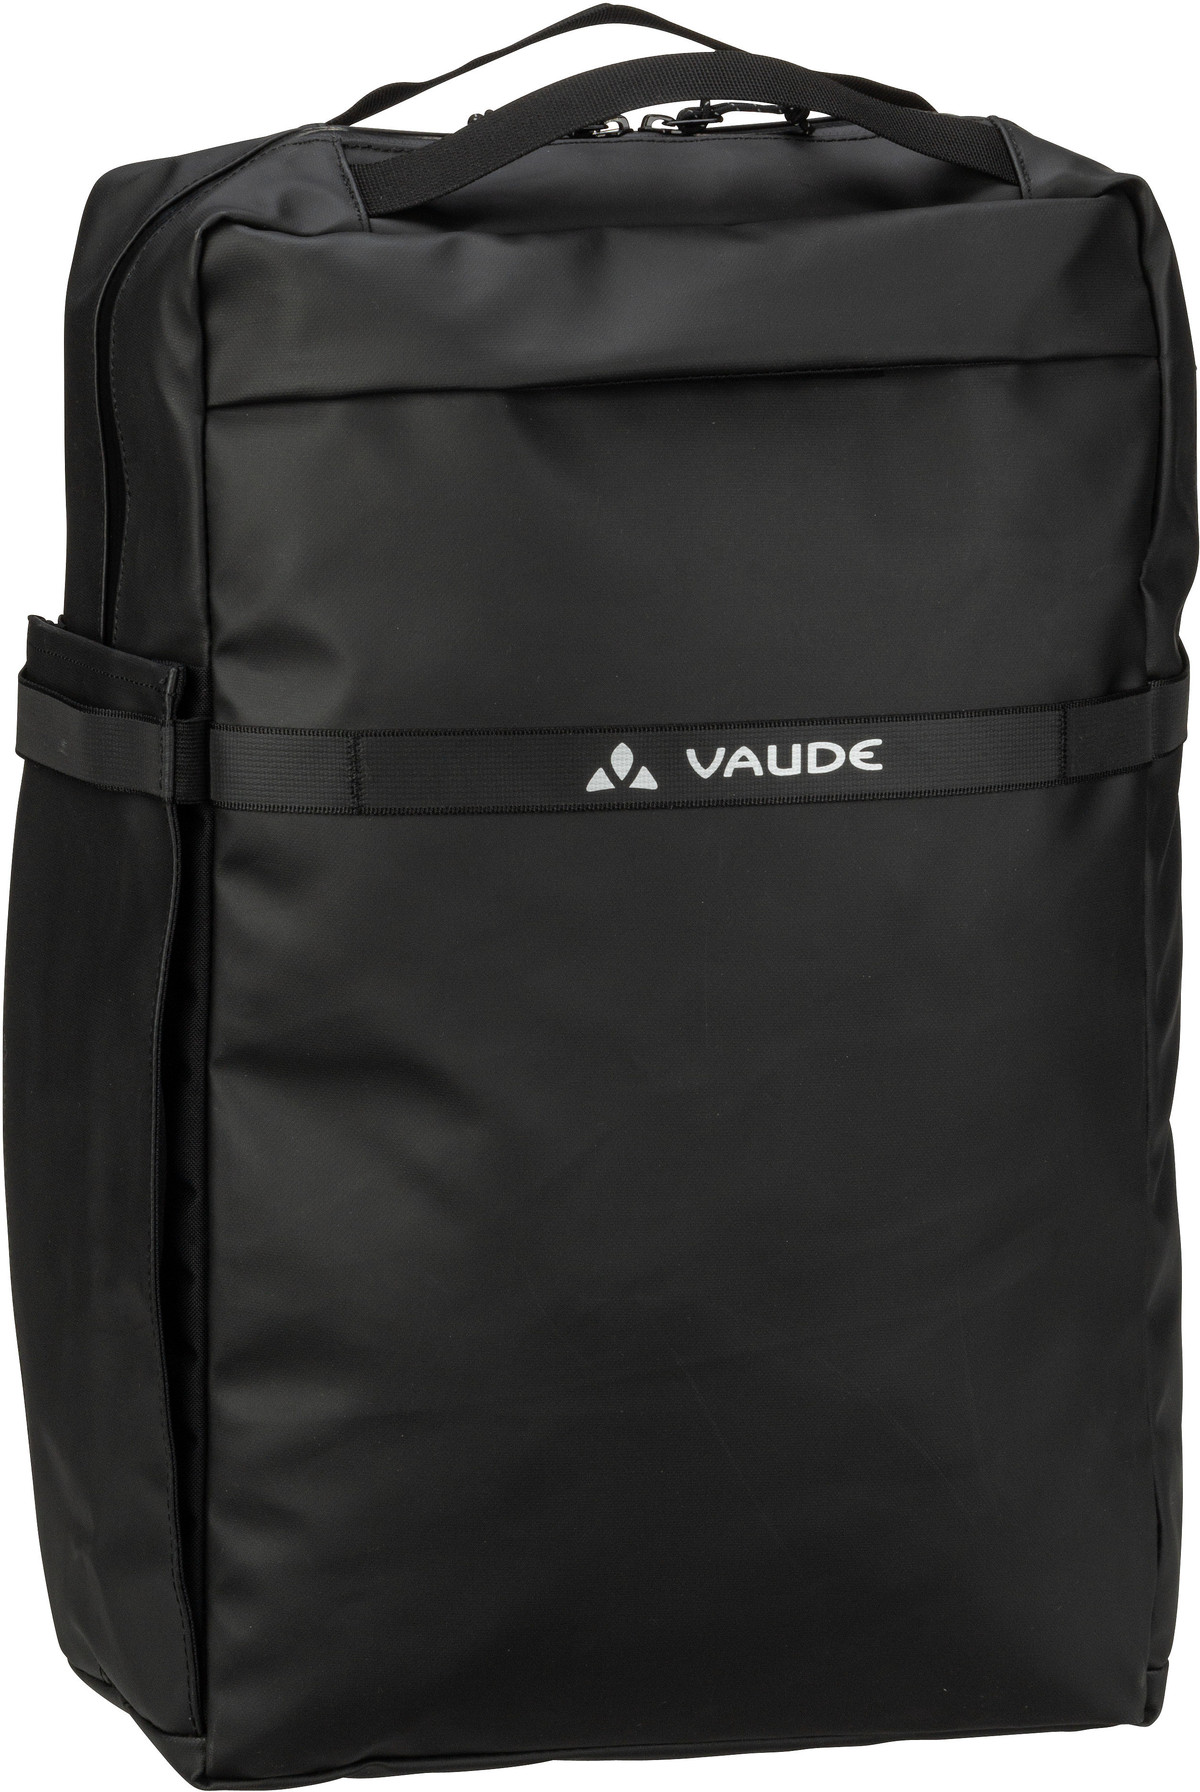 Vaude  Mineo Transformer Backpack 20 - 2in1 Fahrradtaschen-Rucksack - Schwarz (Black)